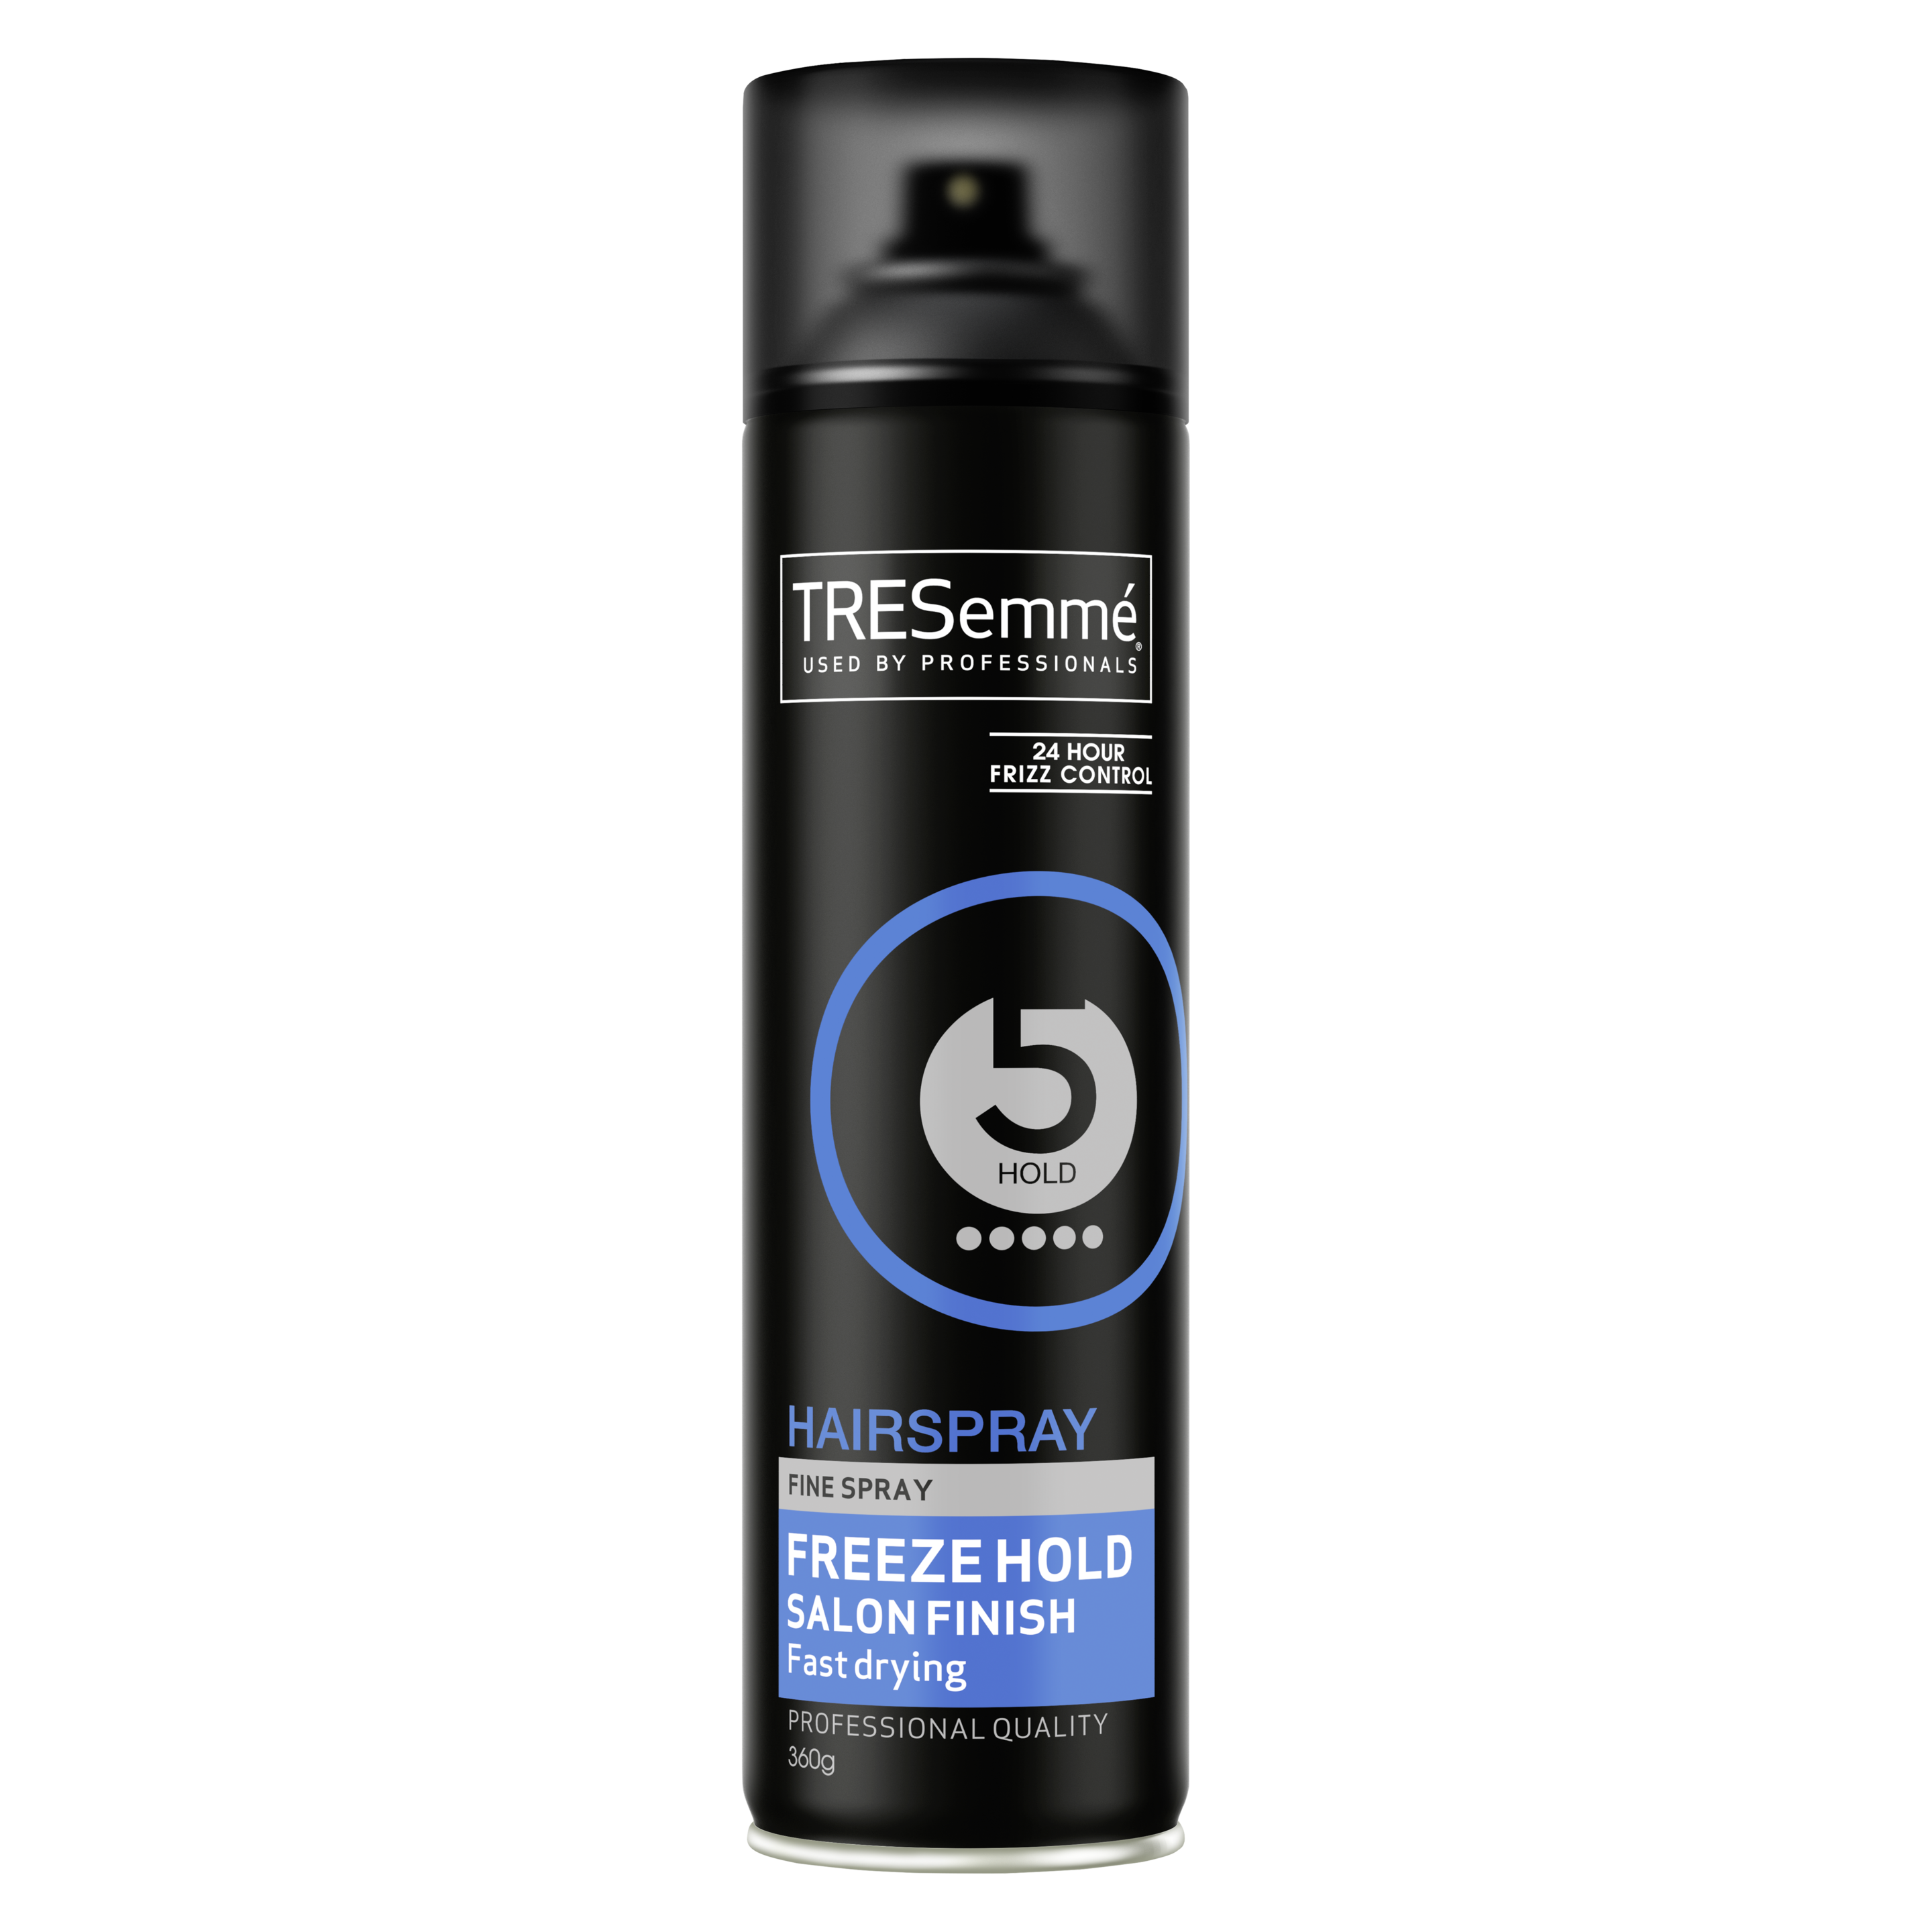 A 360g can of TRESemmé Salon Finish Freeze Hold Hairspray